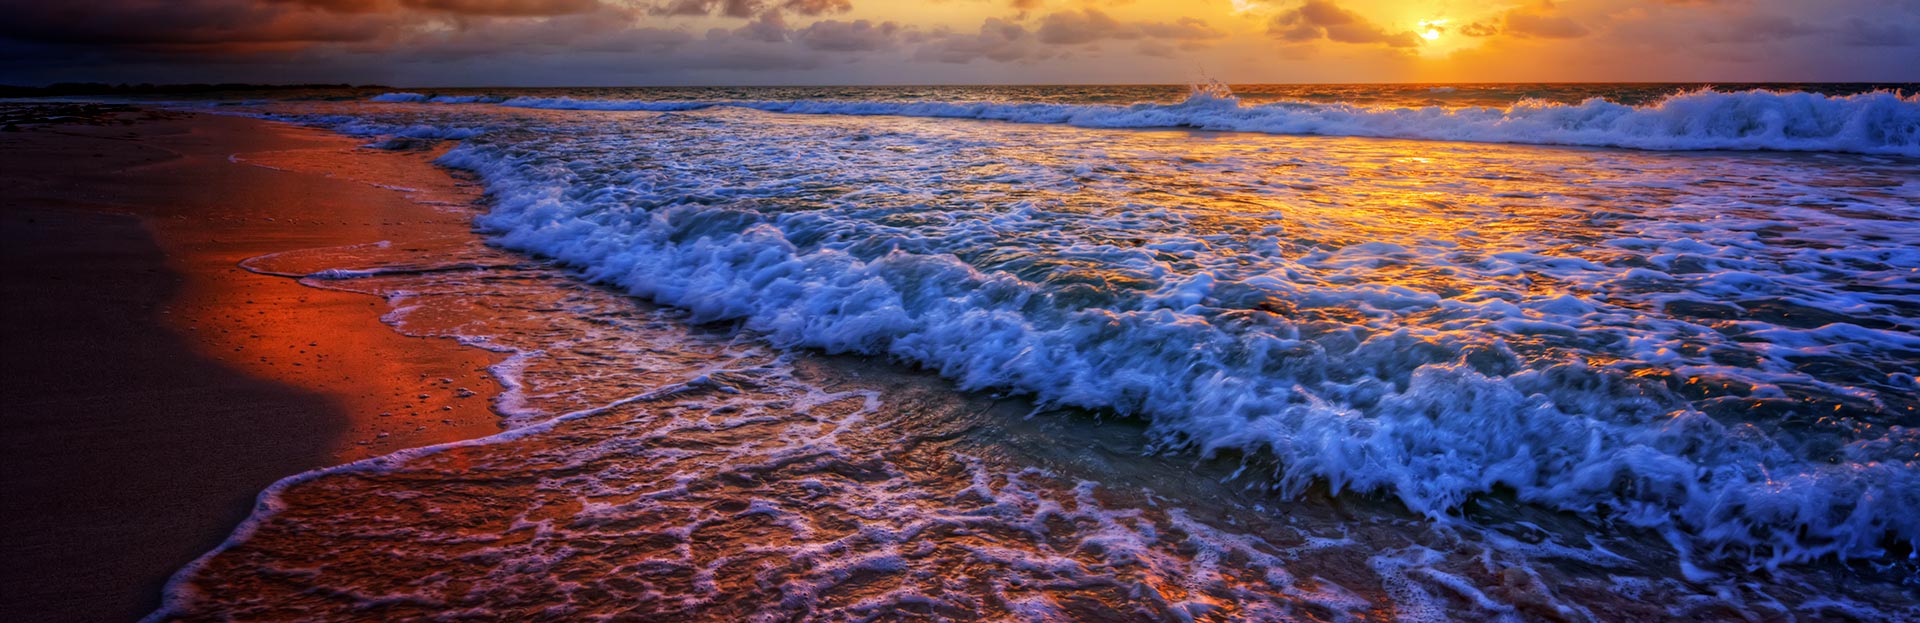 Mazatlan Sunset Beach